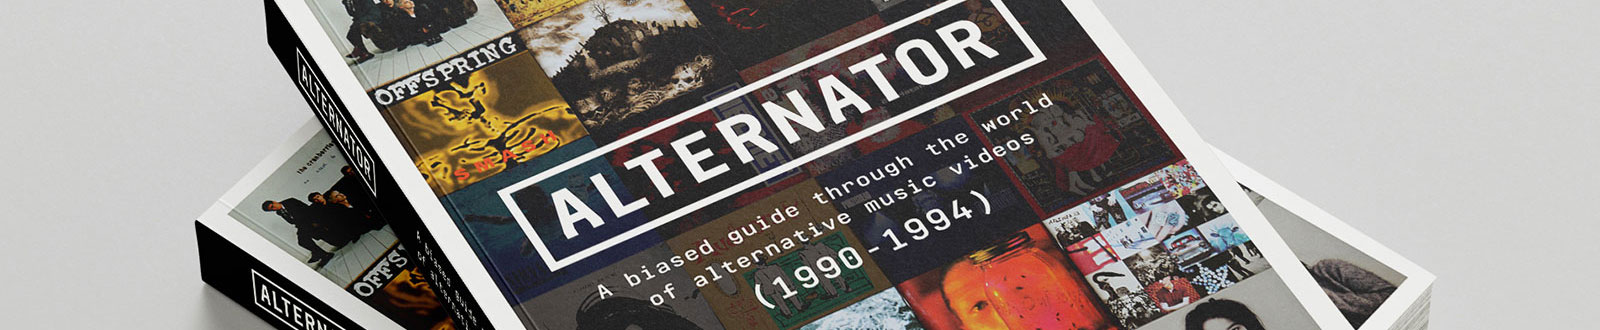 Alternator: A biased guide through the world of alternative music videos (1990-1994)